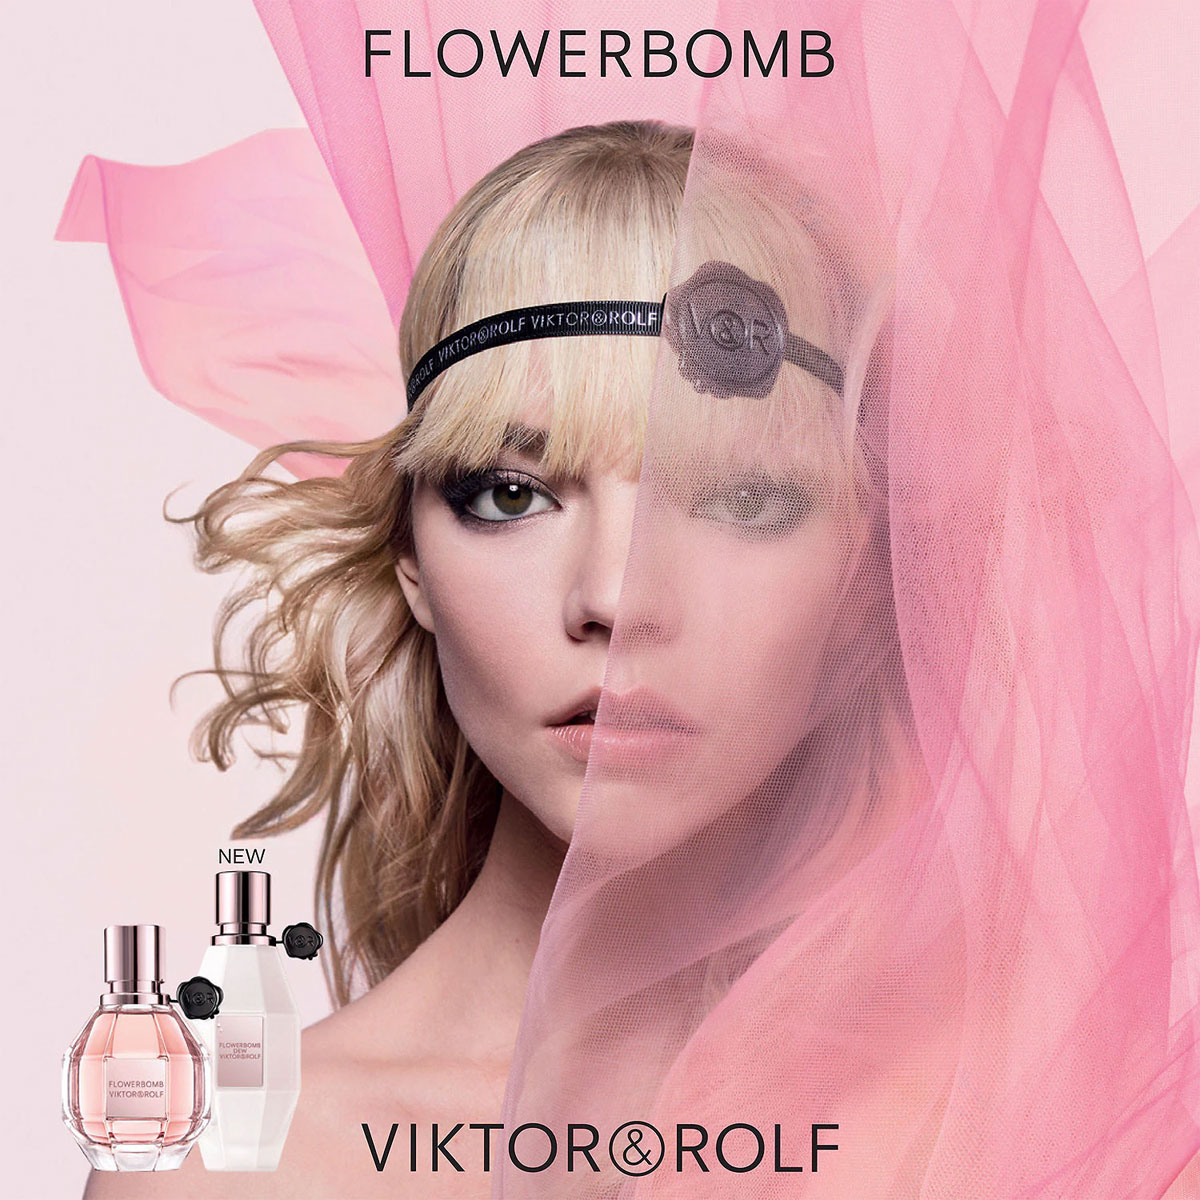 Viktor & Rolf Flowerbomb Dew Fragrance Ad